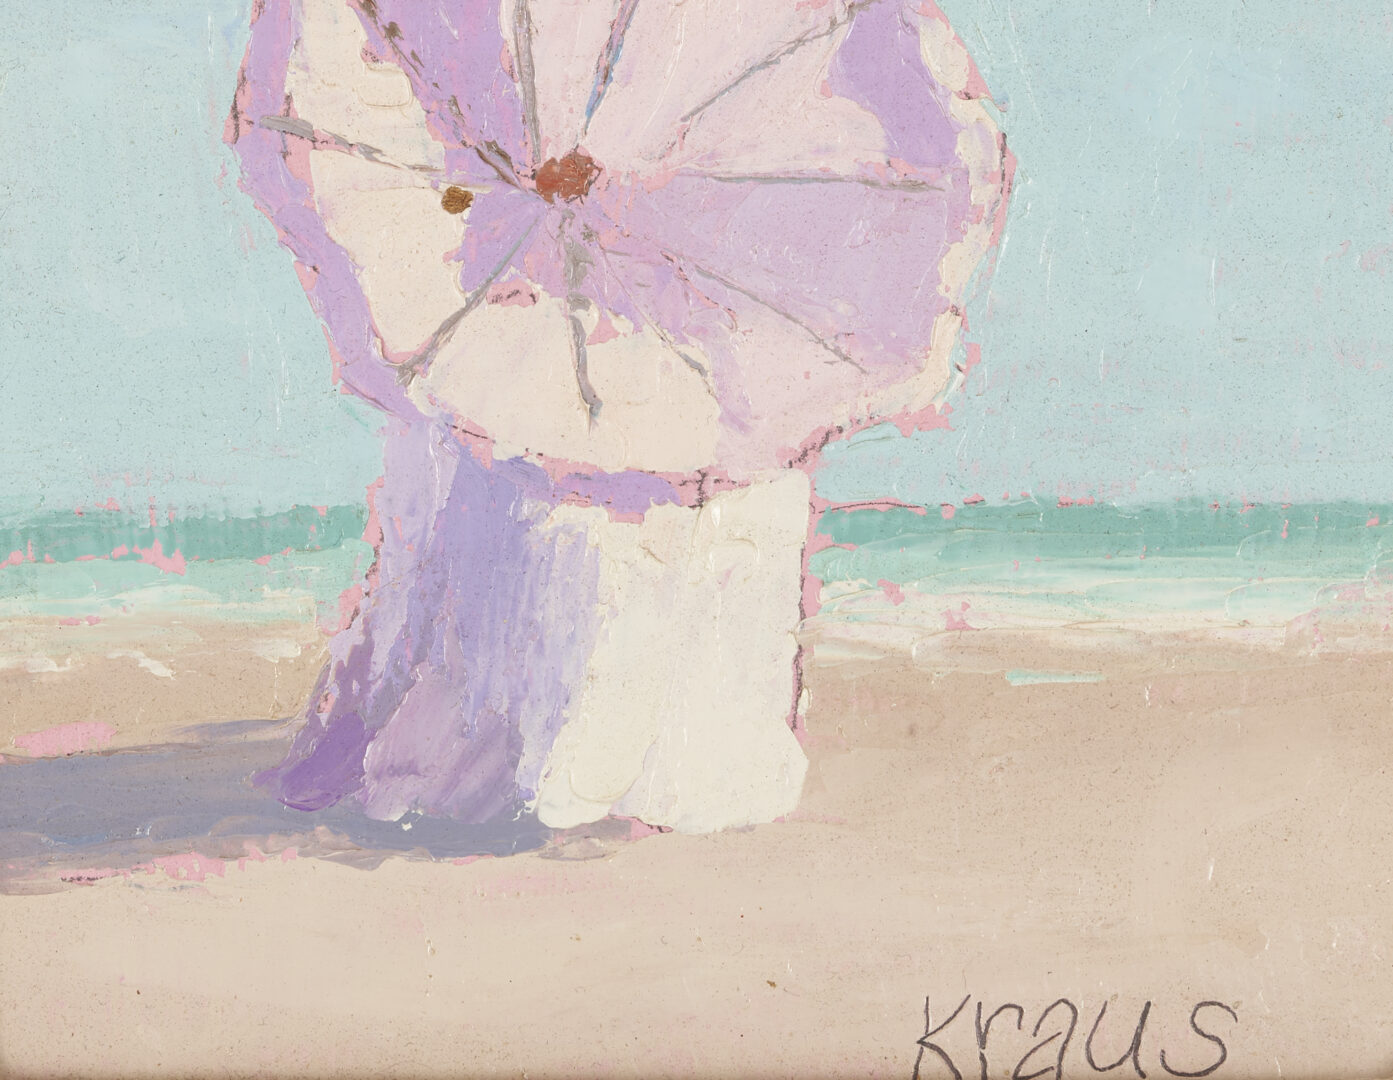 Lot 13: Harold Kraus O/B Painting, Sunlight